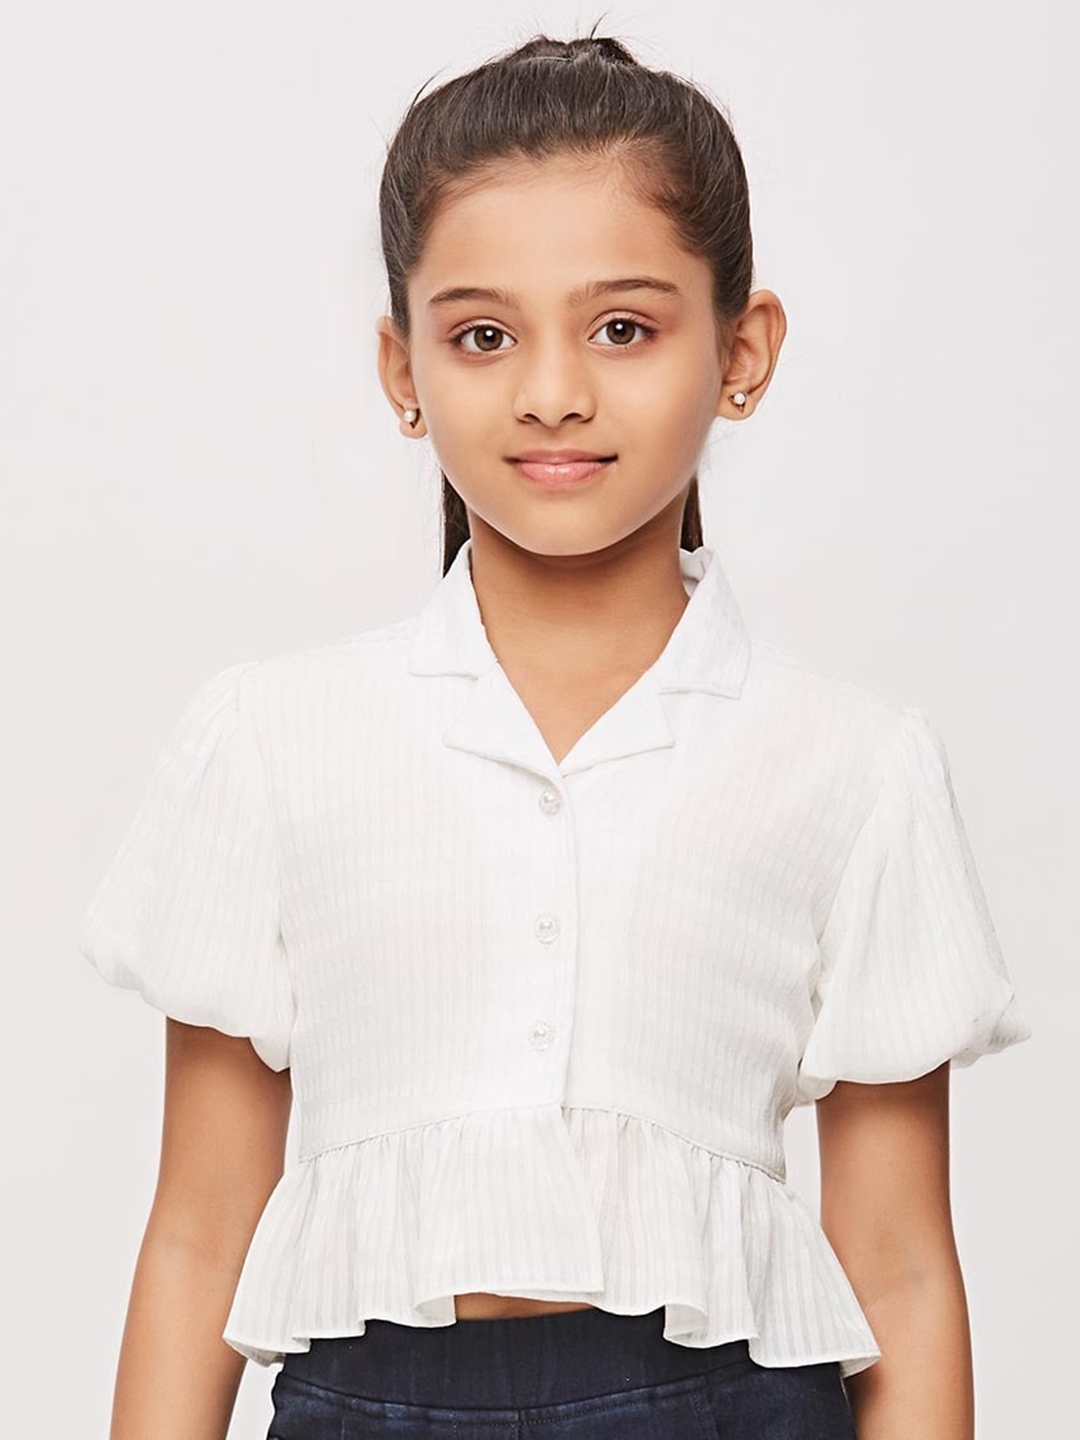 Buy Tiny Girl Shirt Collar Puff Sleeves Shirt Style Sleeve Top Tops